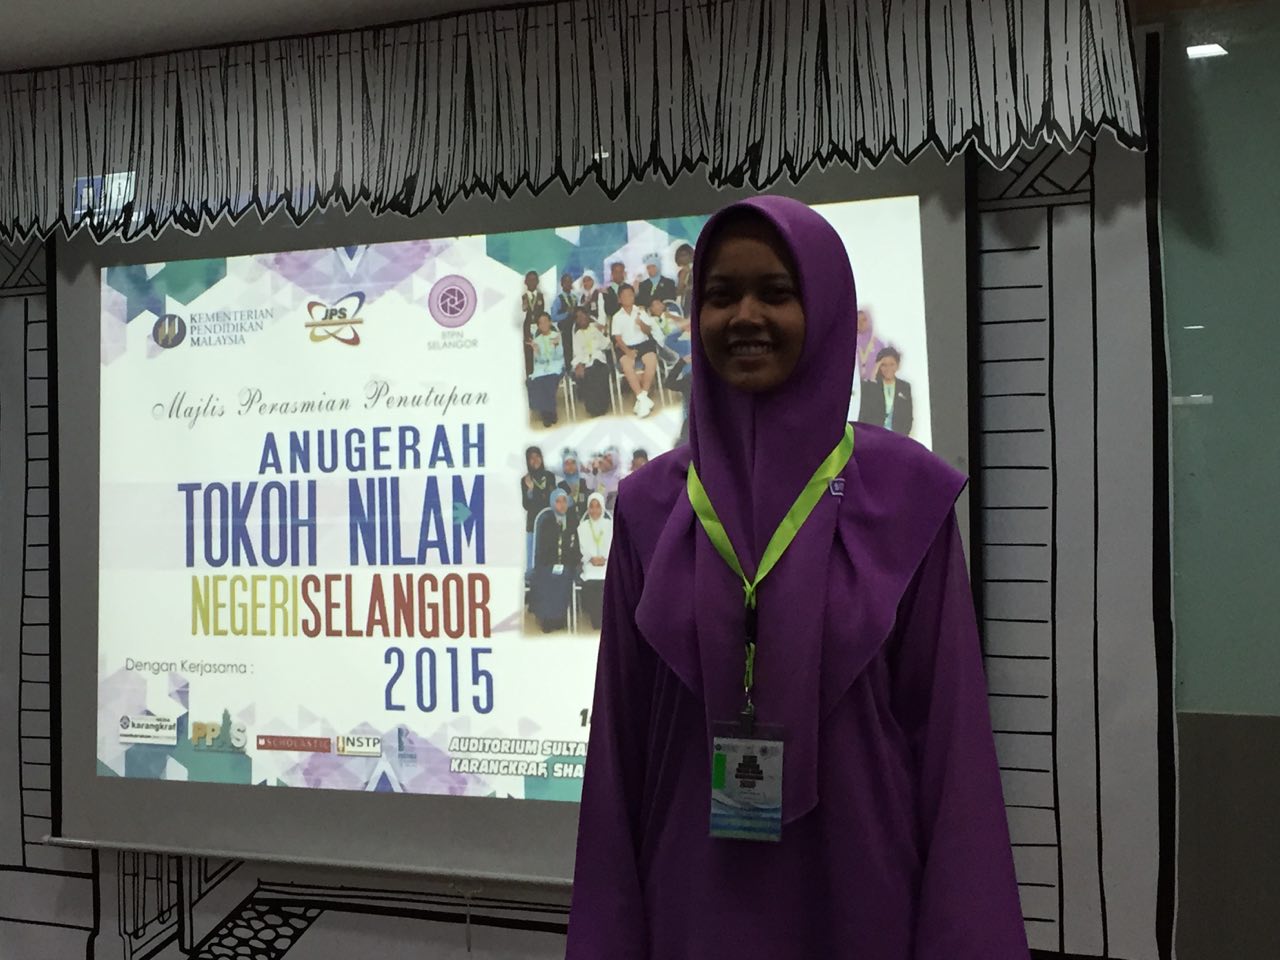 PUSAT SUMBER SMK SUNGAI BESAR: Anugerah Tokoh NILAM 2015